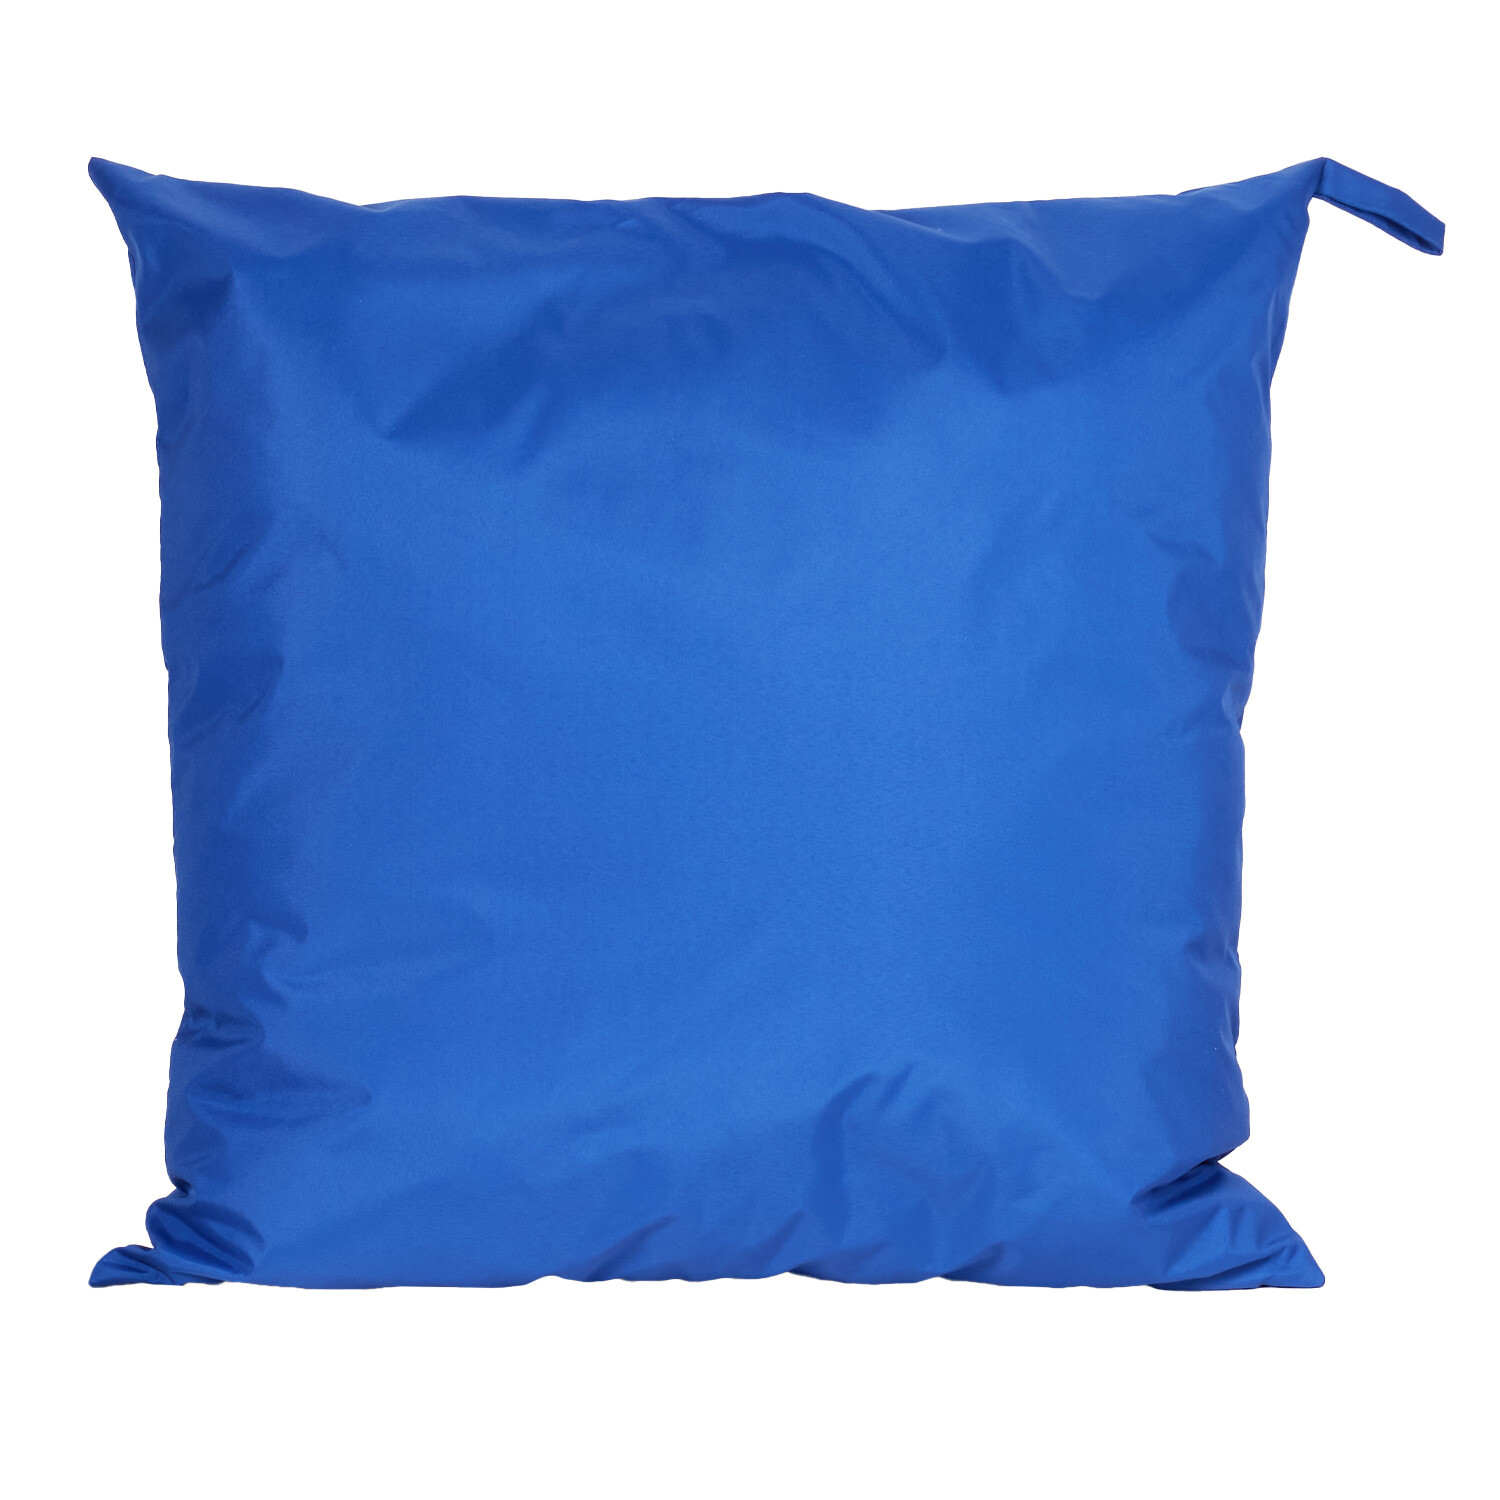 Outdoor Floor Cushion - Blue Image 1